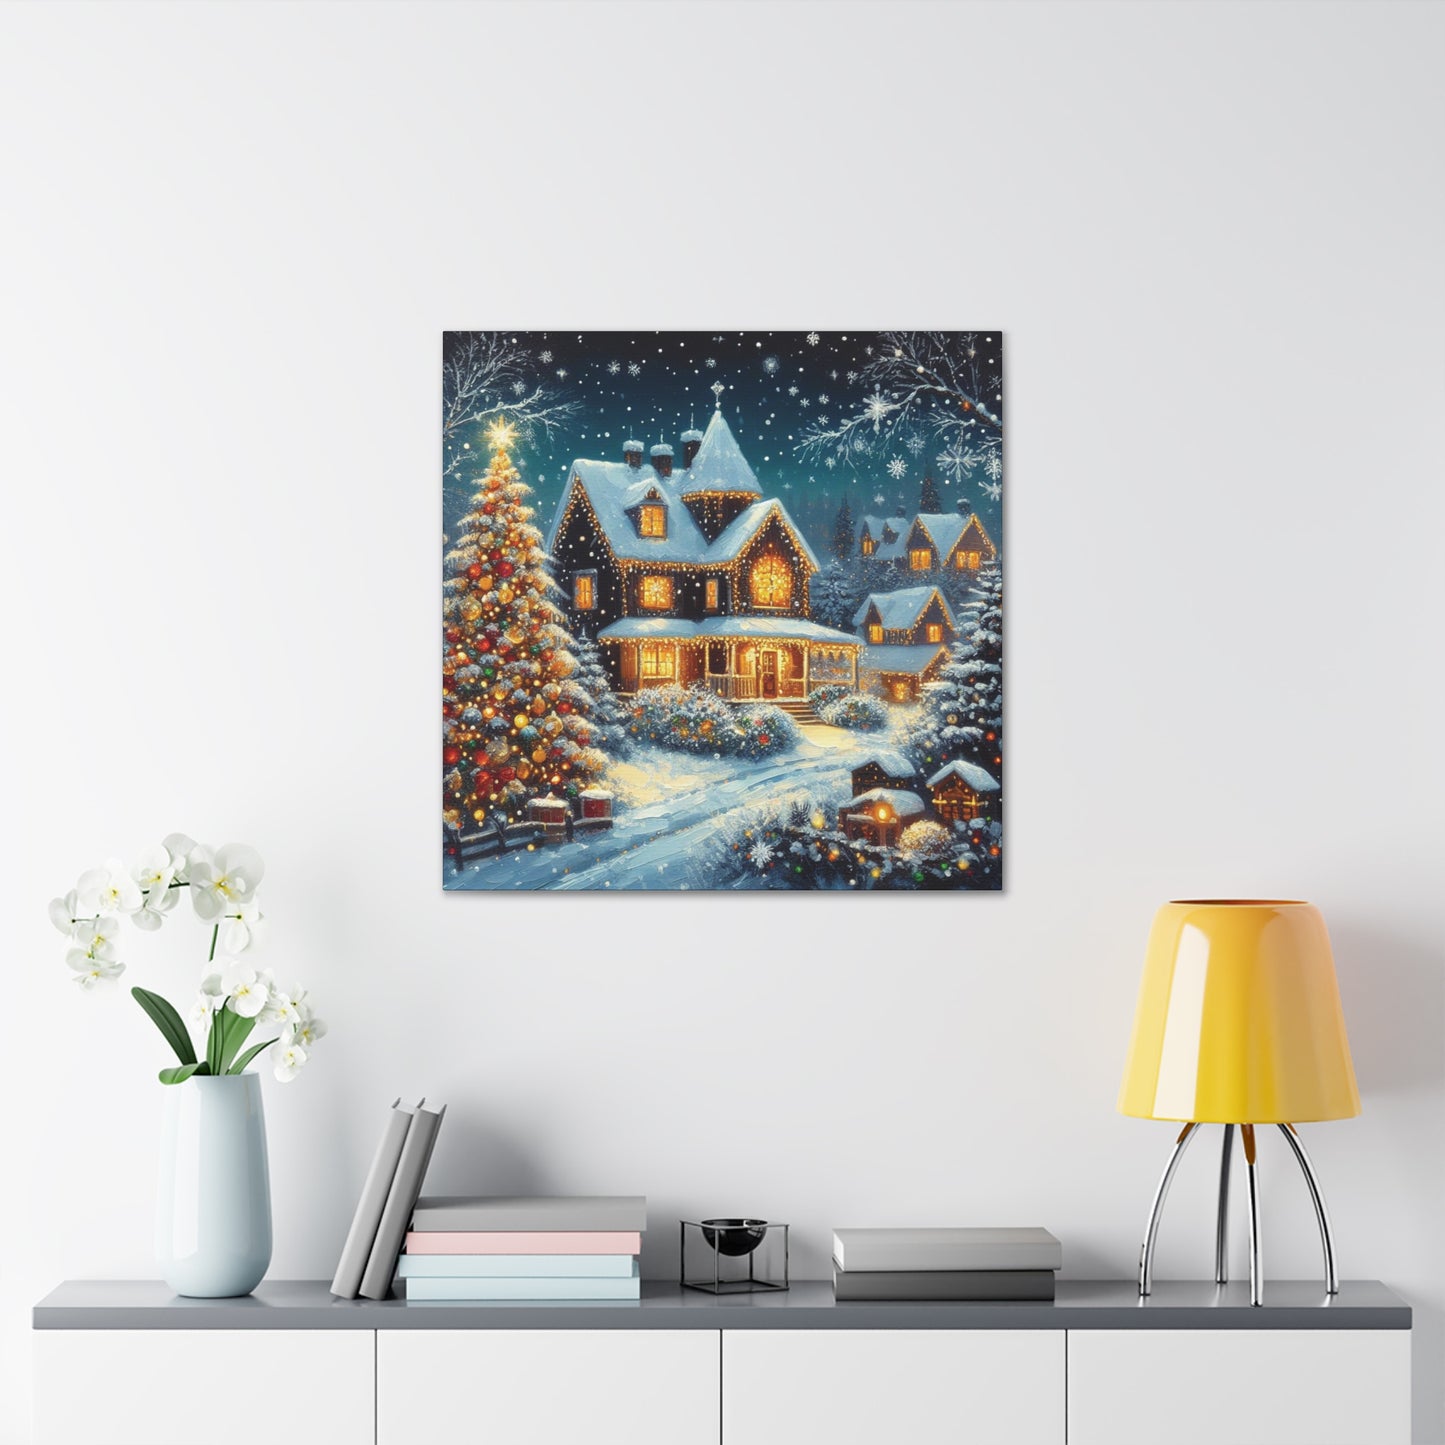 Christmas Wall Art for the Livingroom - Canvas Wall Art Deals. Noel-themed Artwork